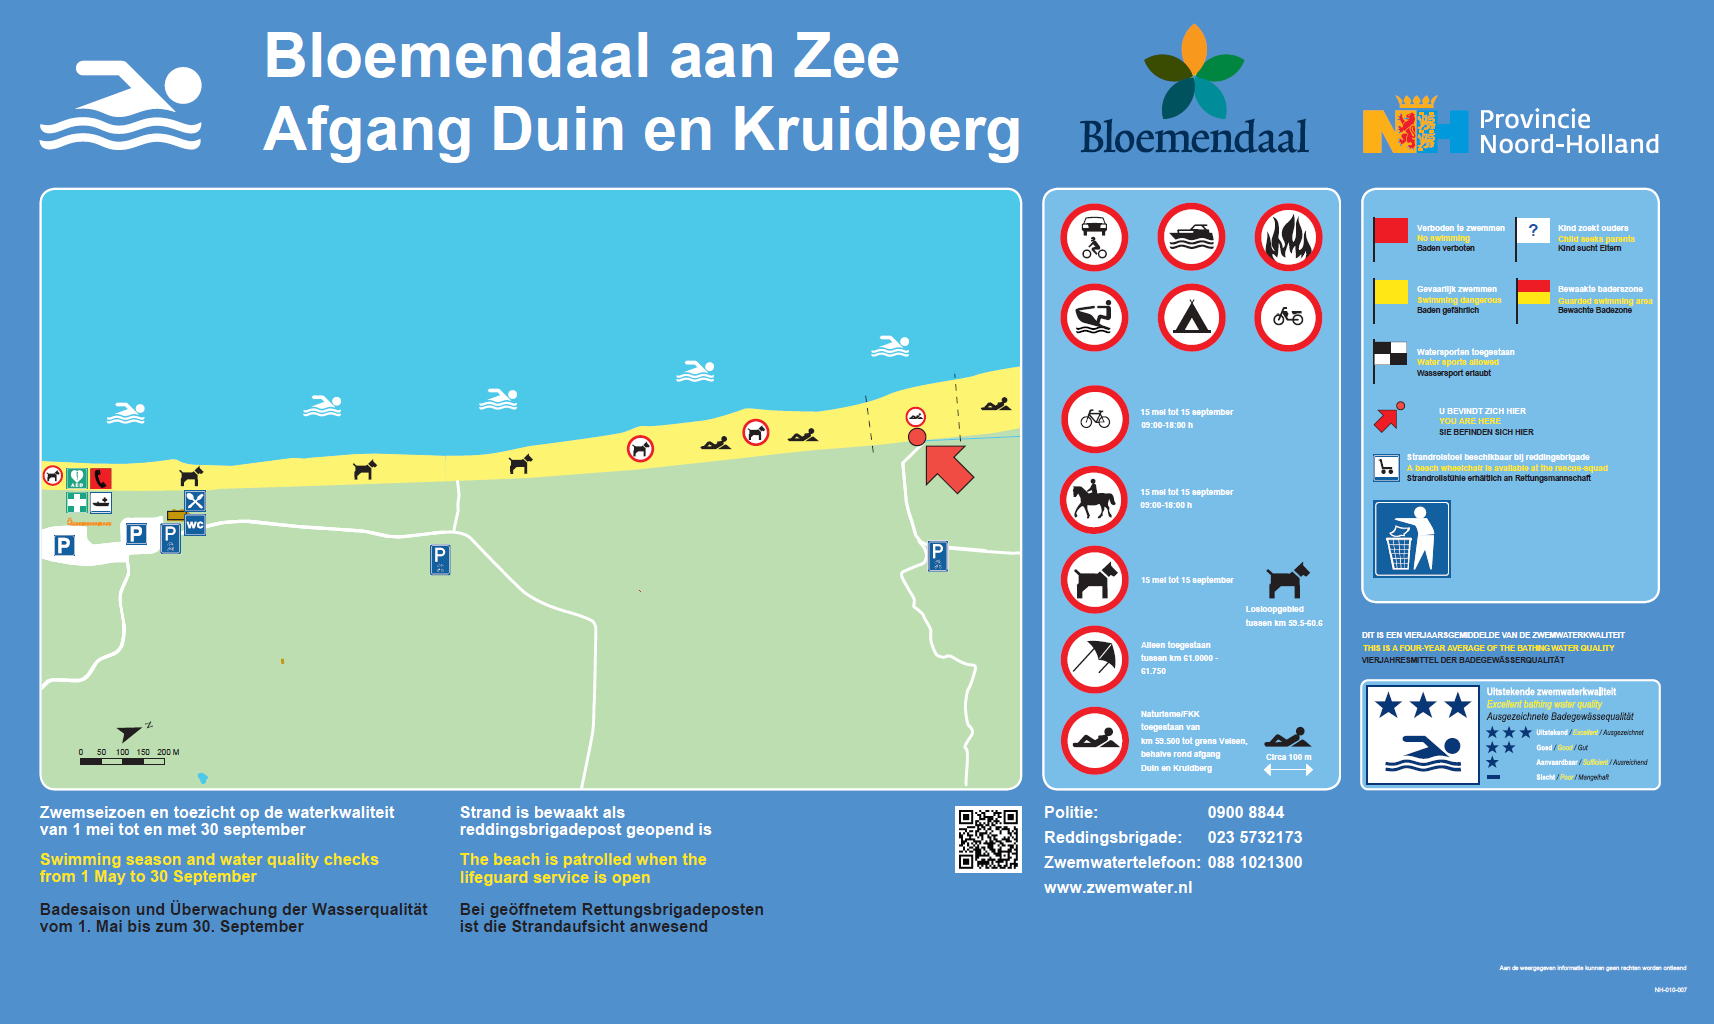 The information board at the swimming location Bloemendaal aan Zee, Afgang Duin en Kruidberg